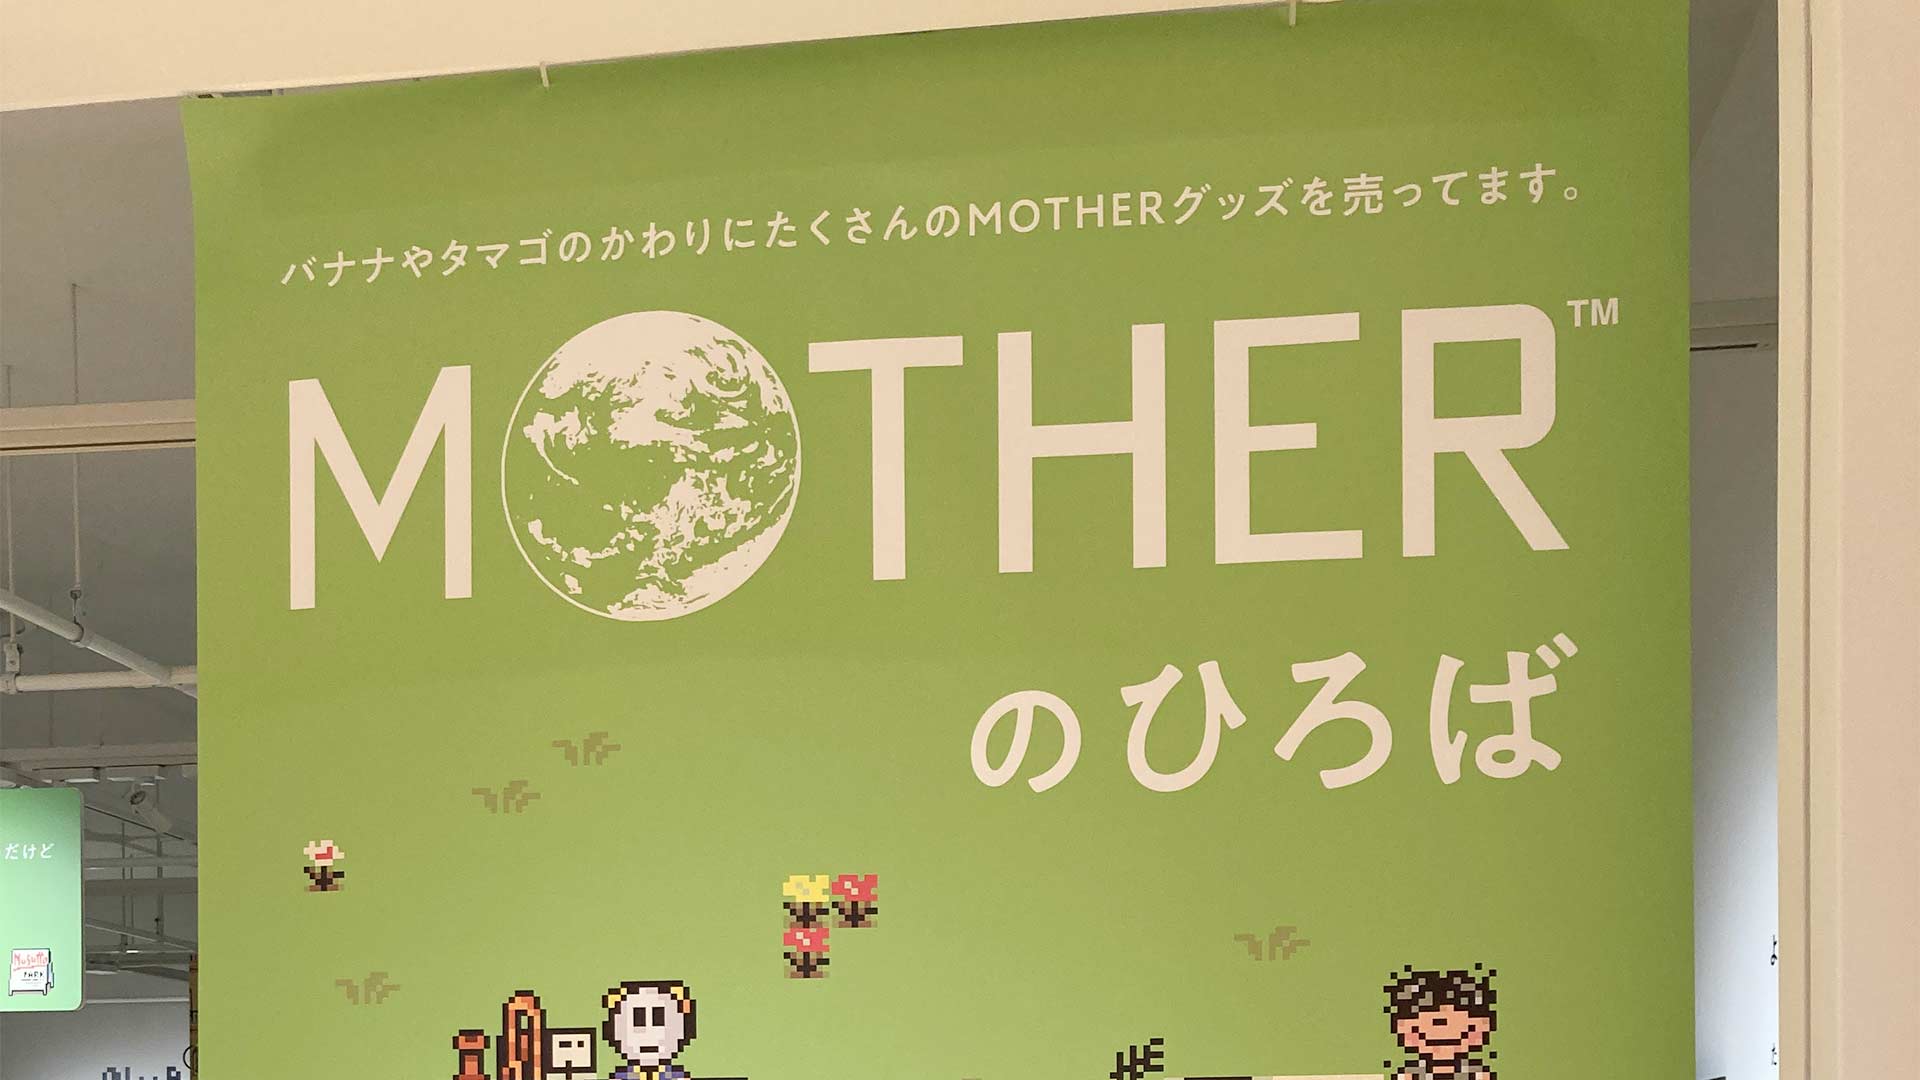 MOTHER2,MOTHERのひろば,ほぼ日,渋谷パルコ,イベント,レトロゲーム